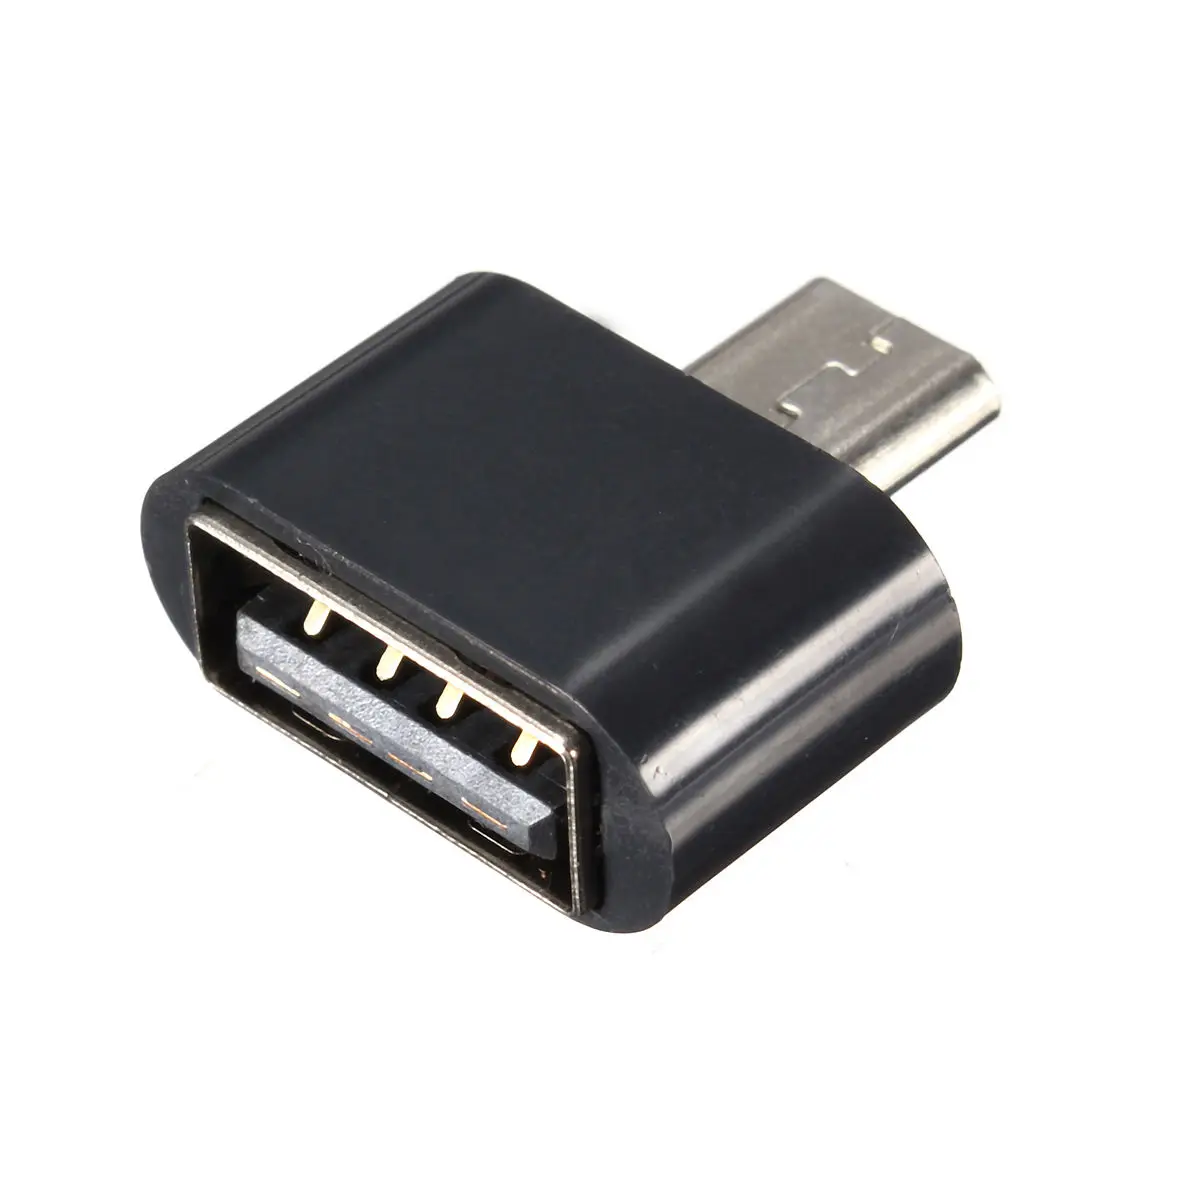 Купить переходник для флешки. OTG переходник Micro USB USB. Переходник OTG Micro USB YHL-t3. Переходник OTG Micro USB USB 2.0. Переходник ОТГ 2.0 USB 2.0.